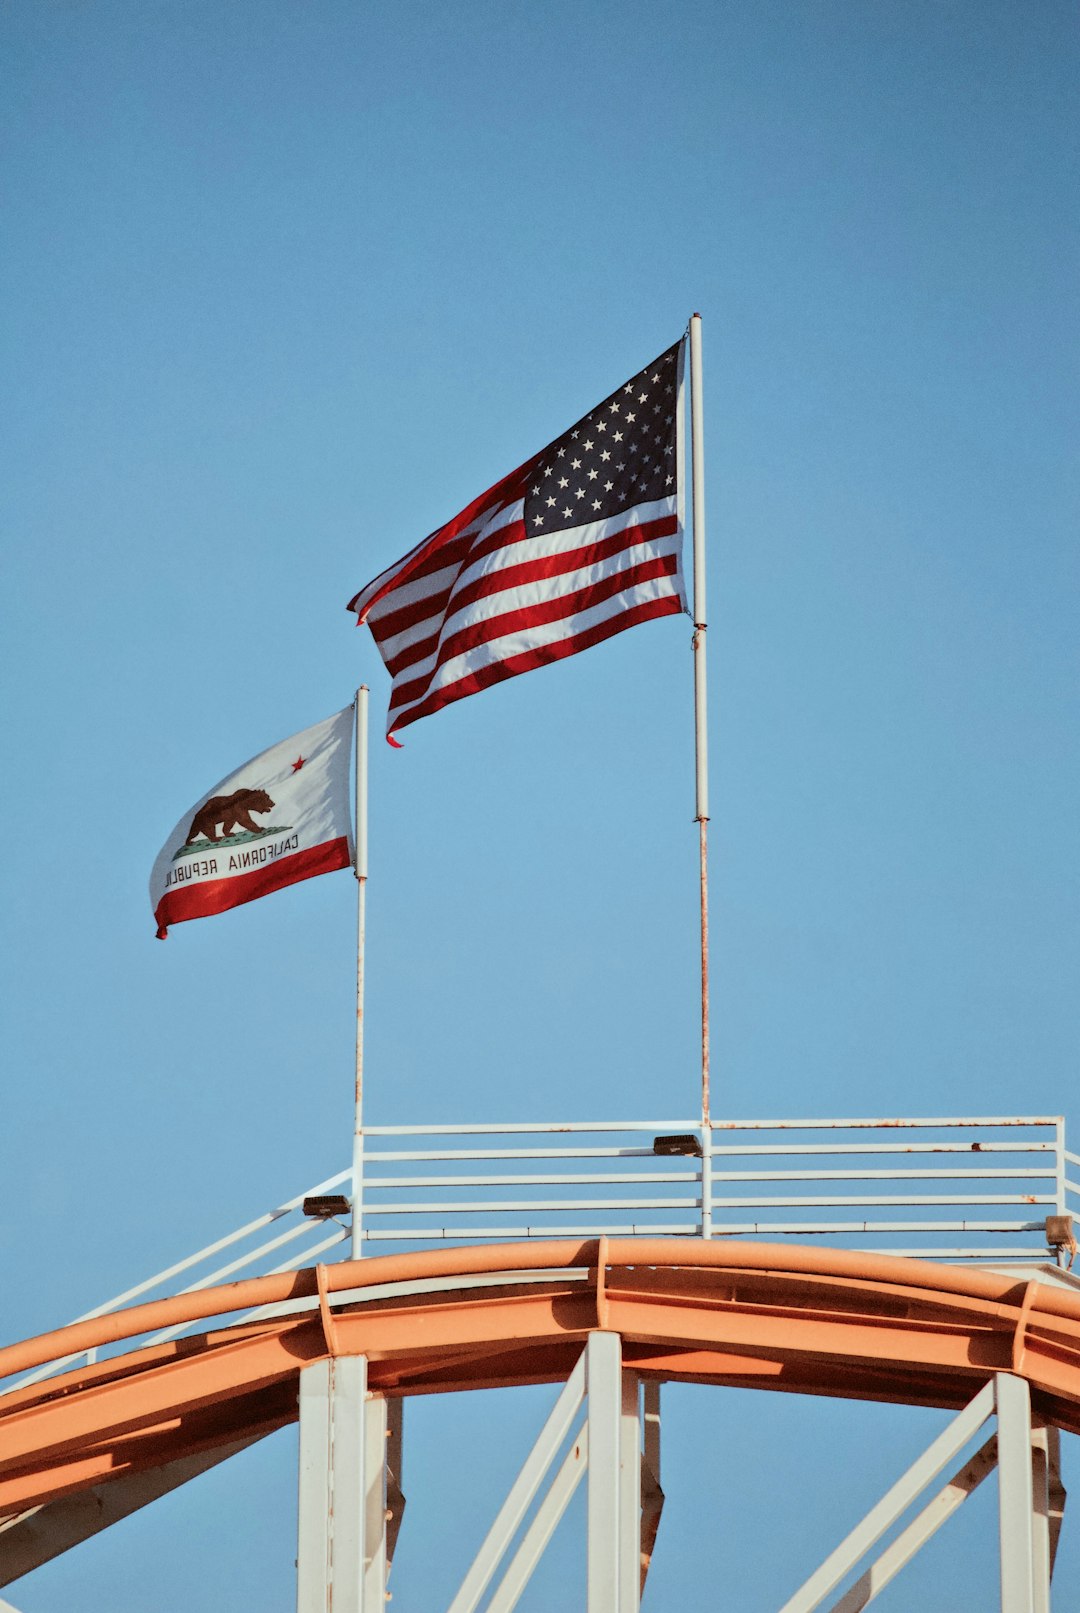 US flag and California flag on poles